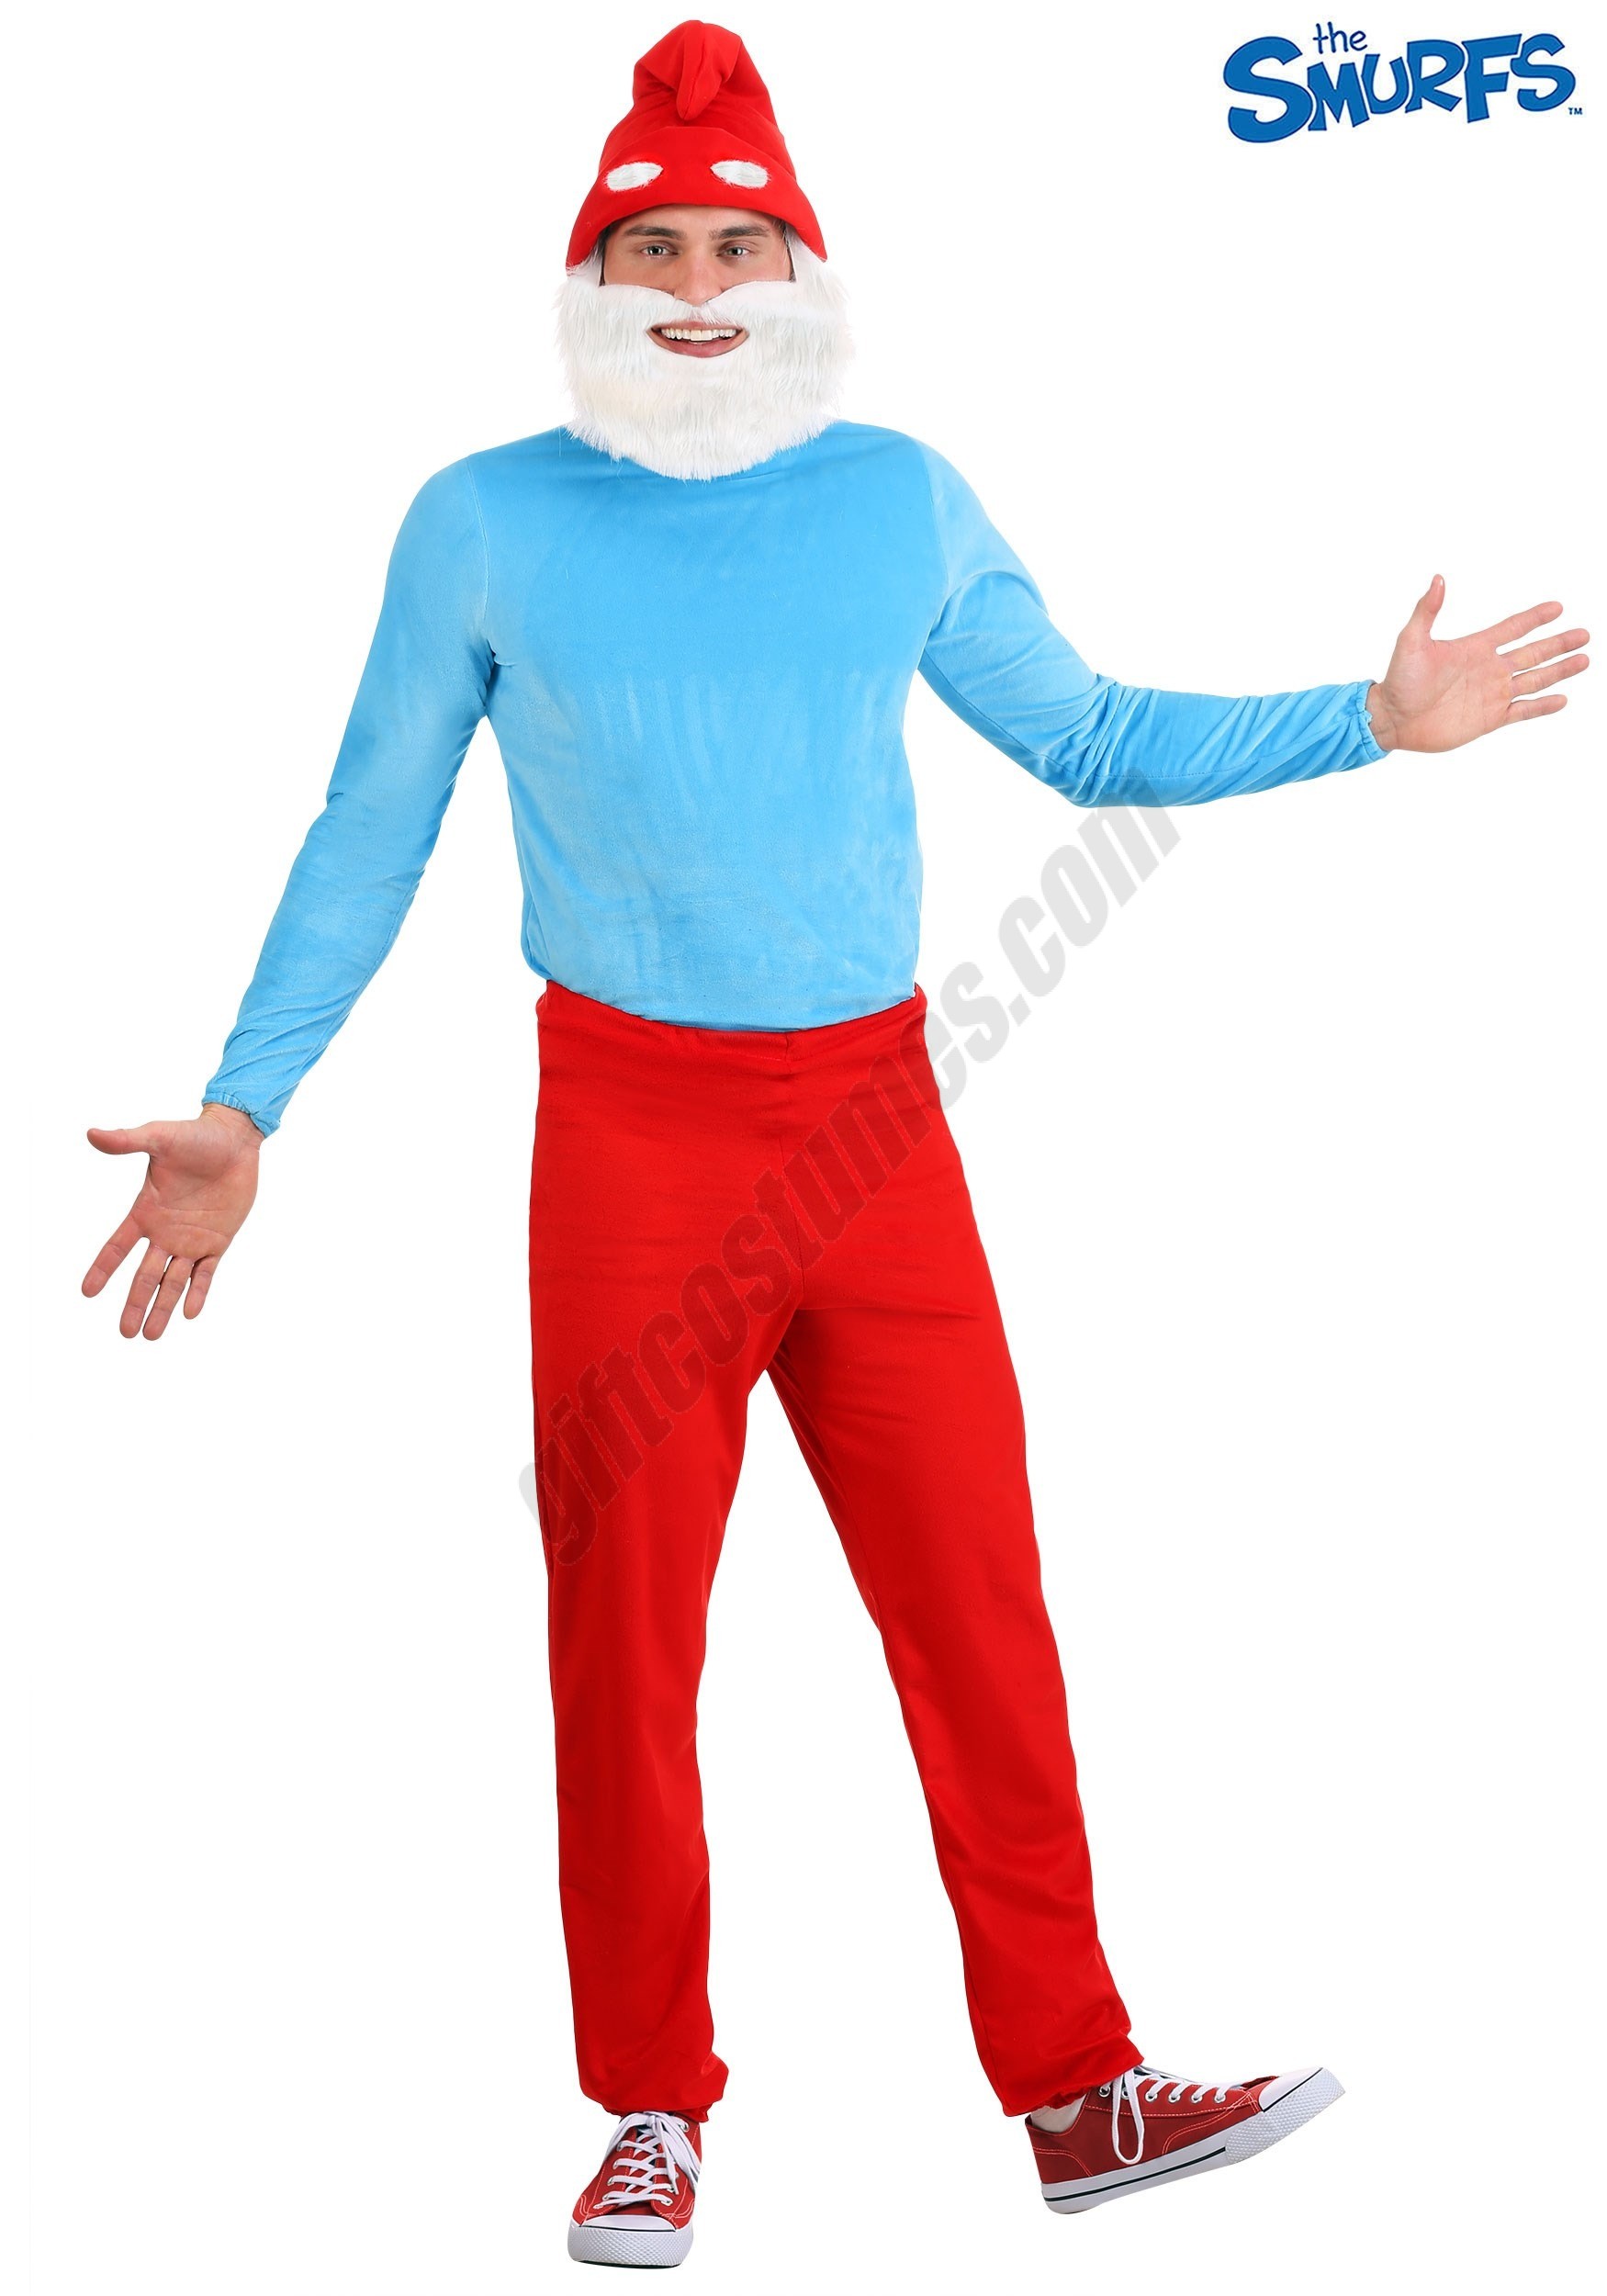 Plus Size Papa Smurf Costume for Men Promotions - Plus Size Papa Smurf Costume for Men Promotions